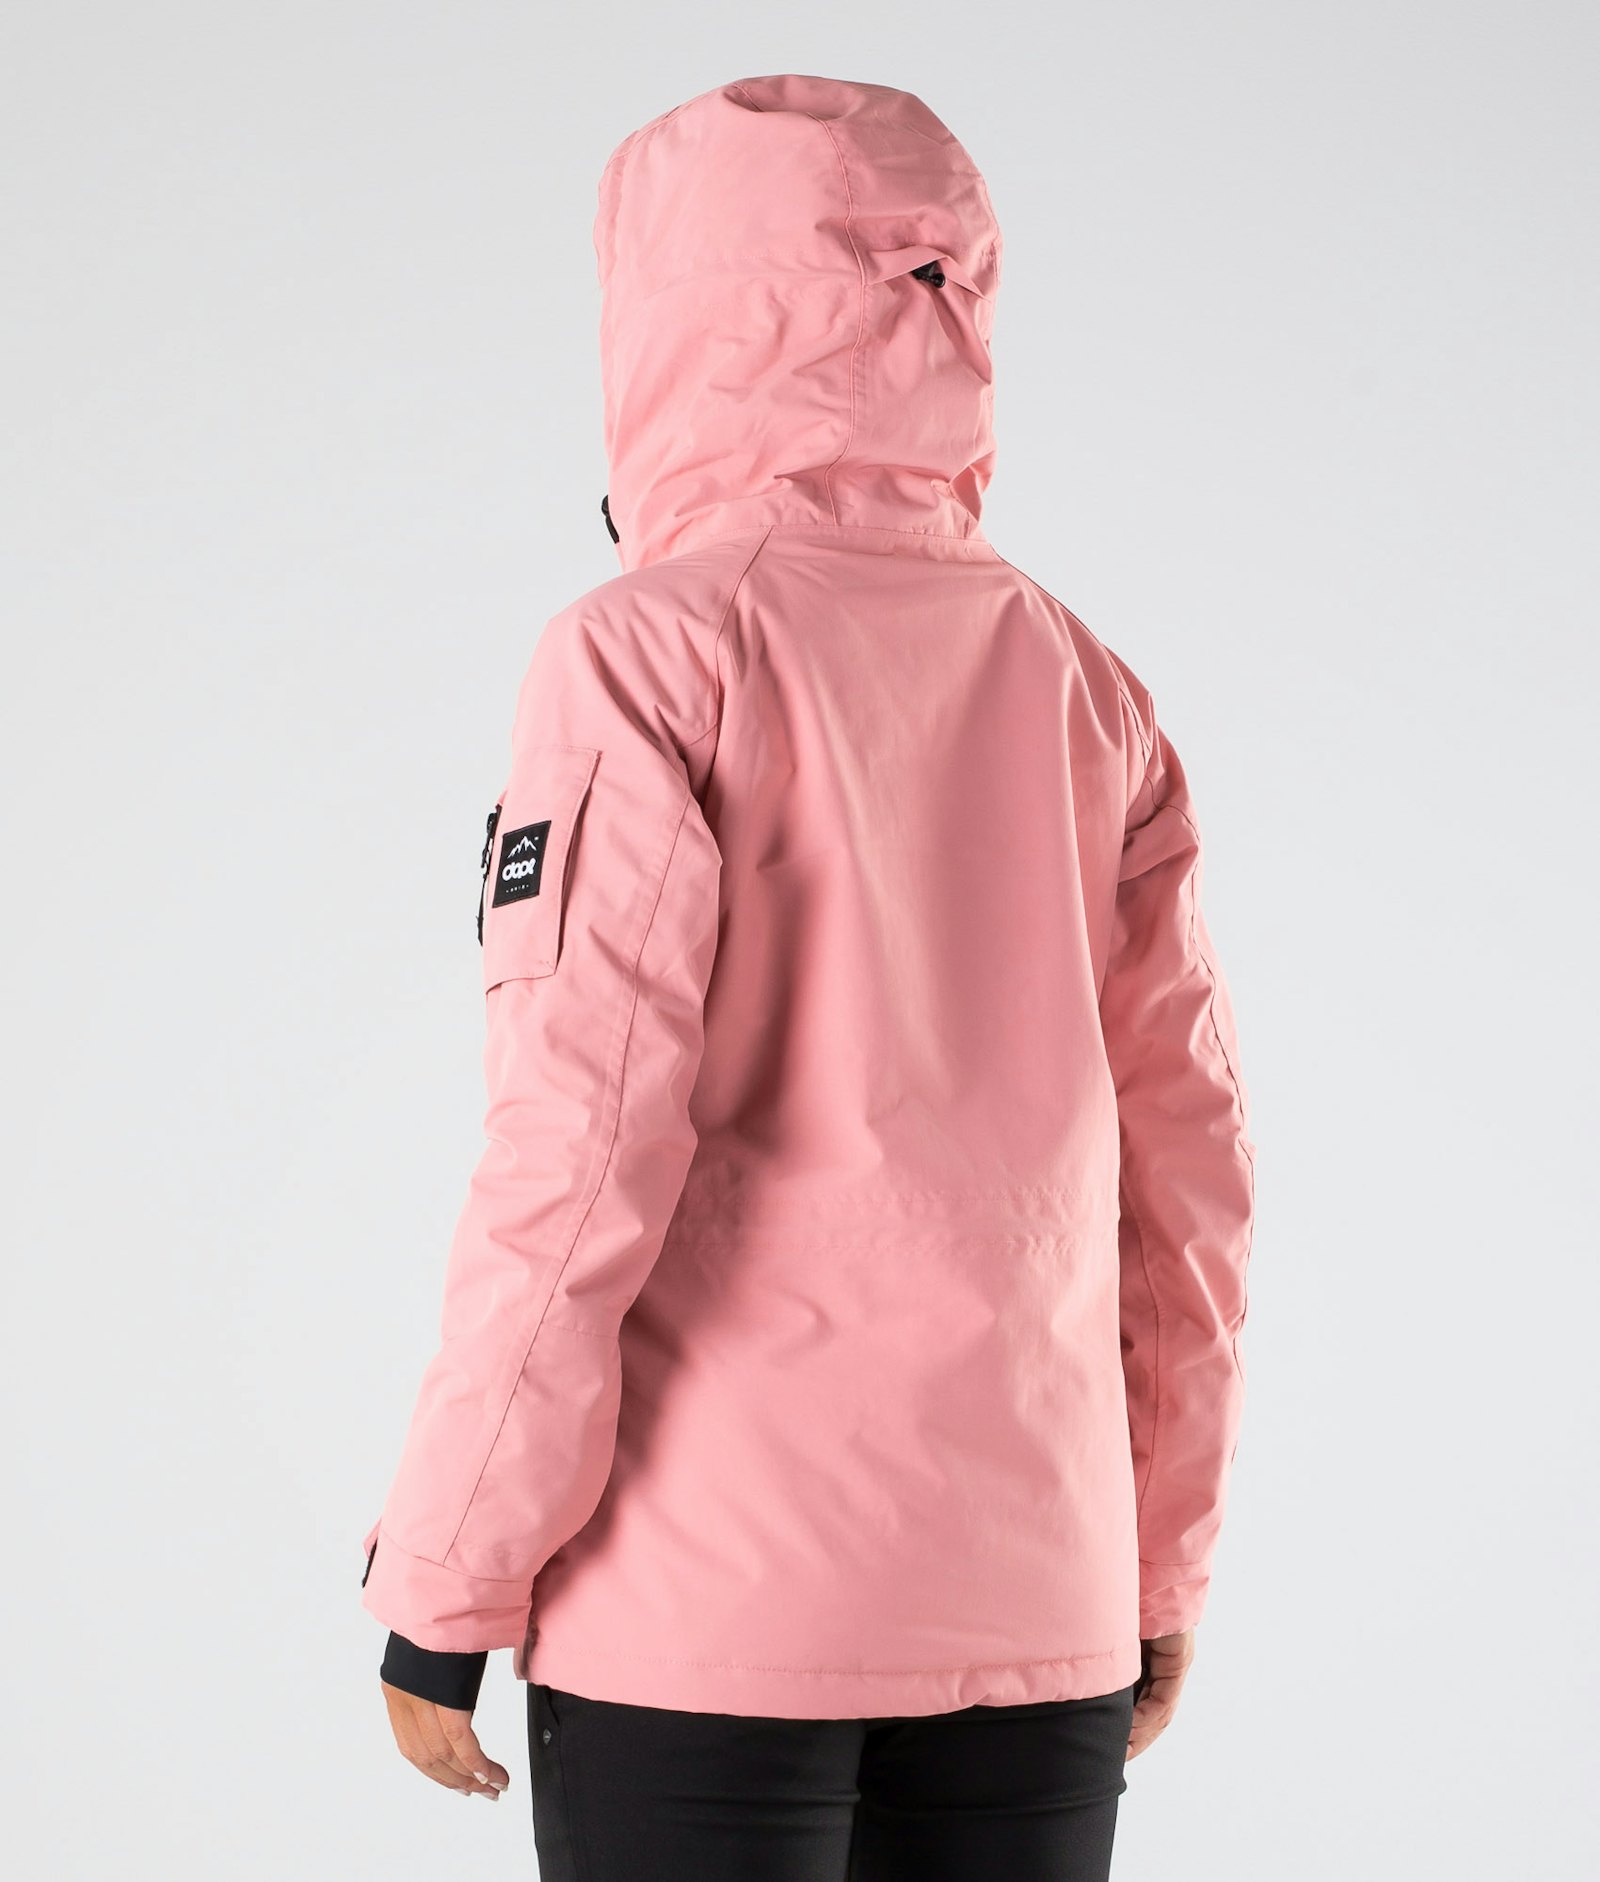 Dope Annok W 2019 Snowboard Jacket Women Pink, Image 3 of 9